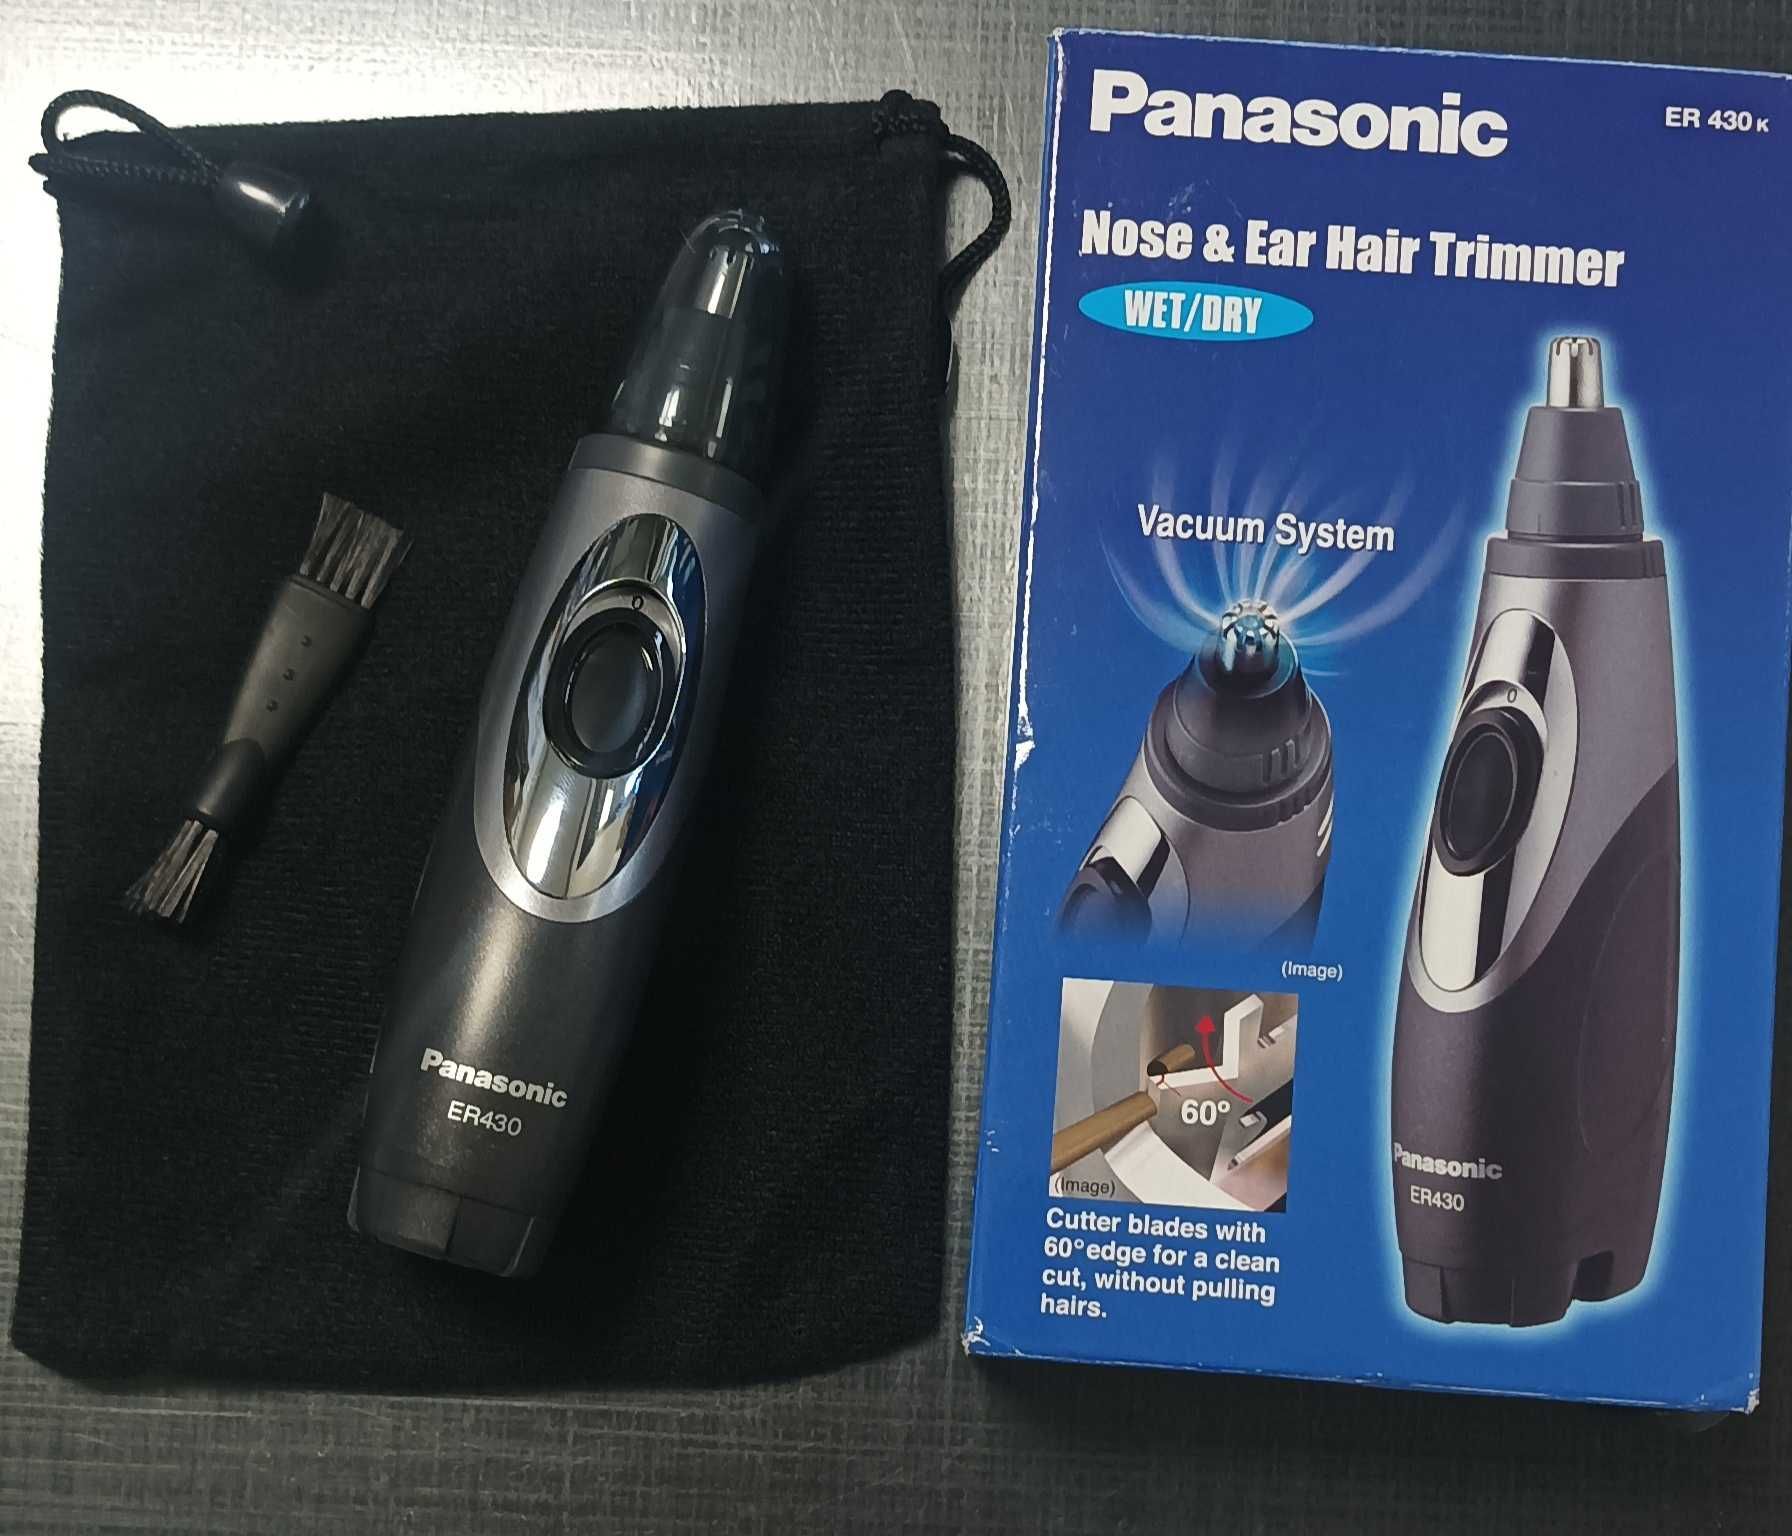 Panasonic ER-430 trymer do nosa i uszu